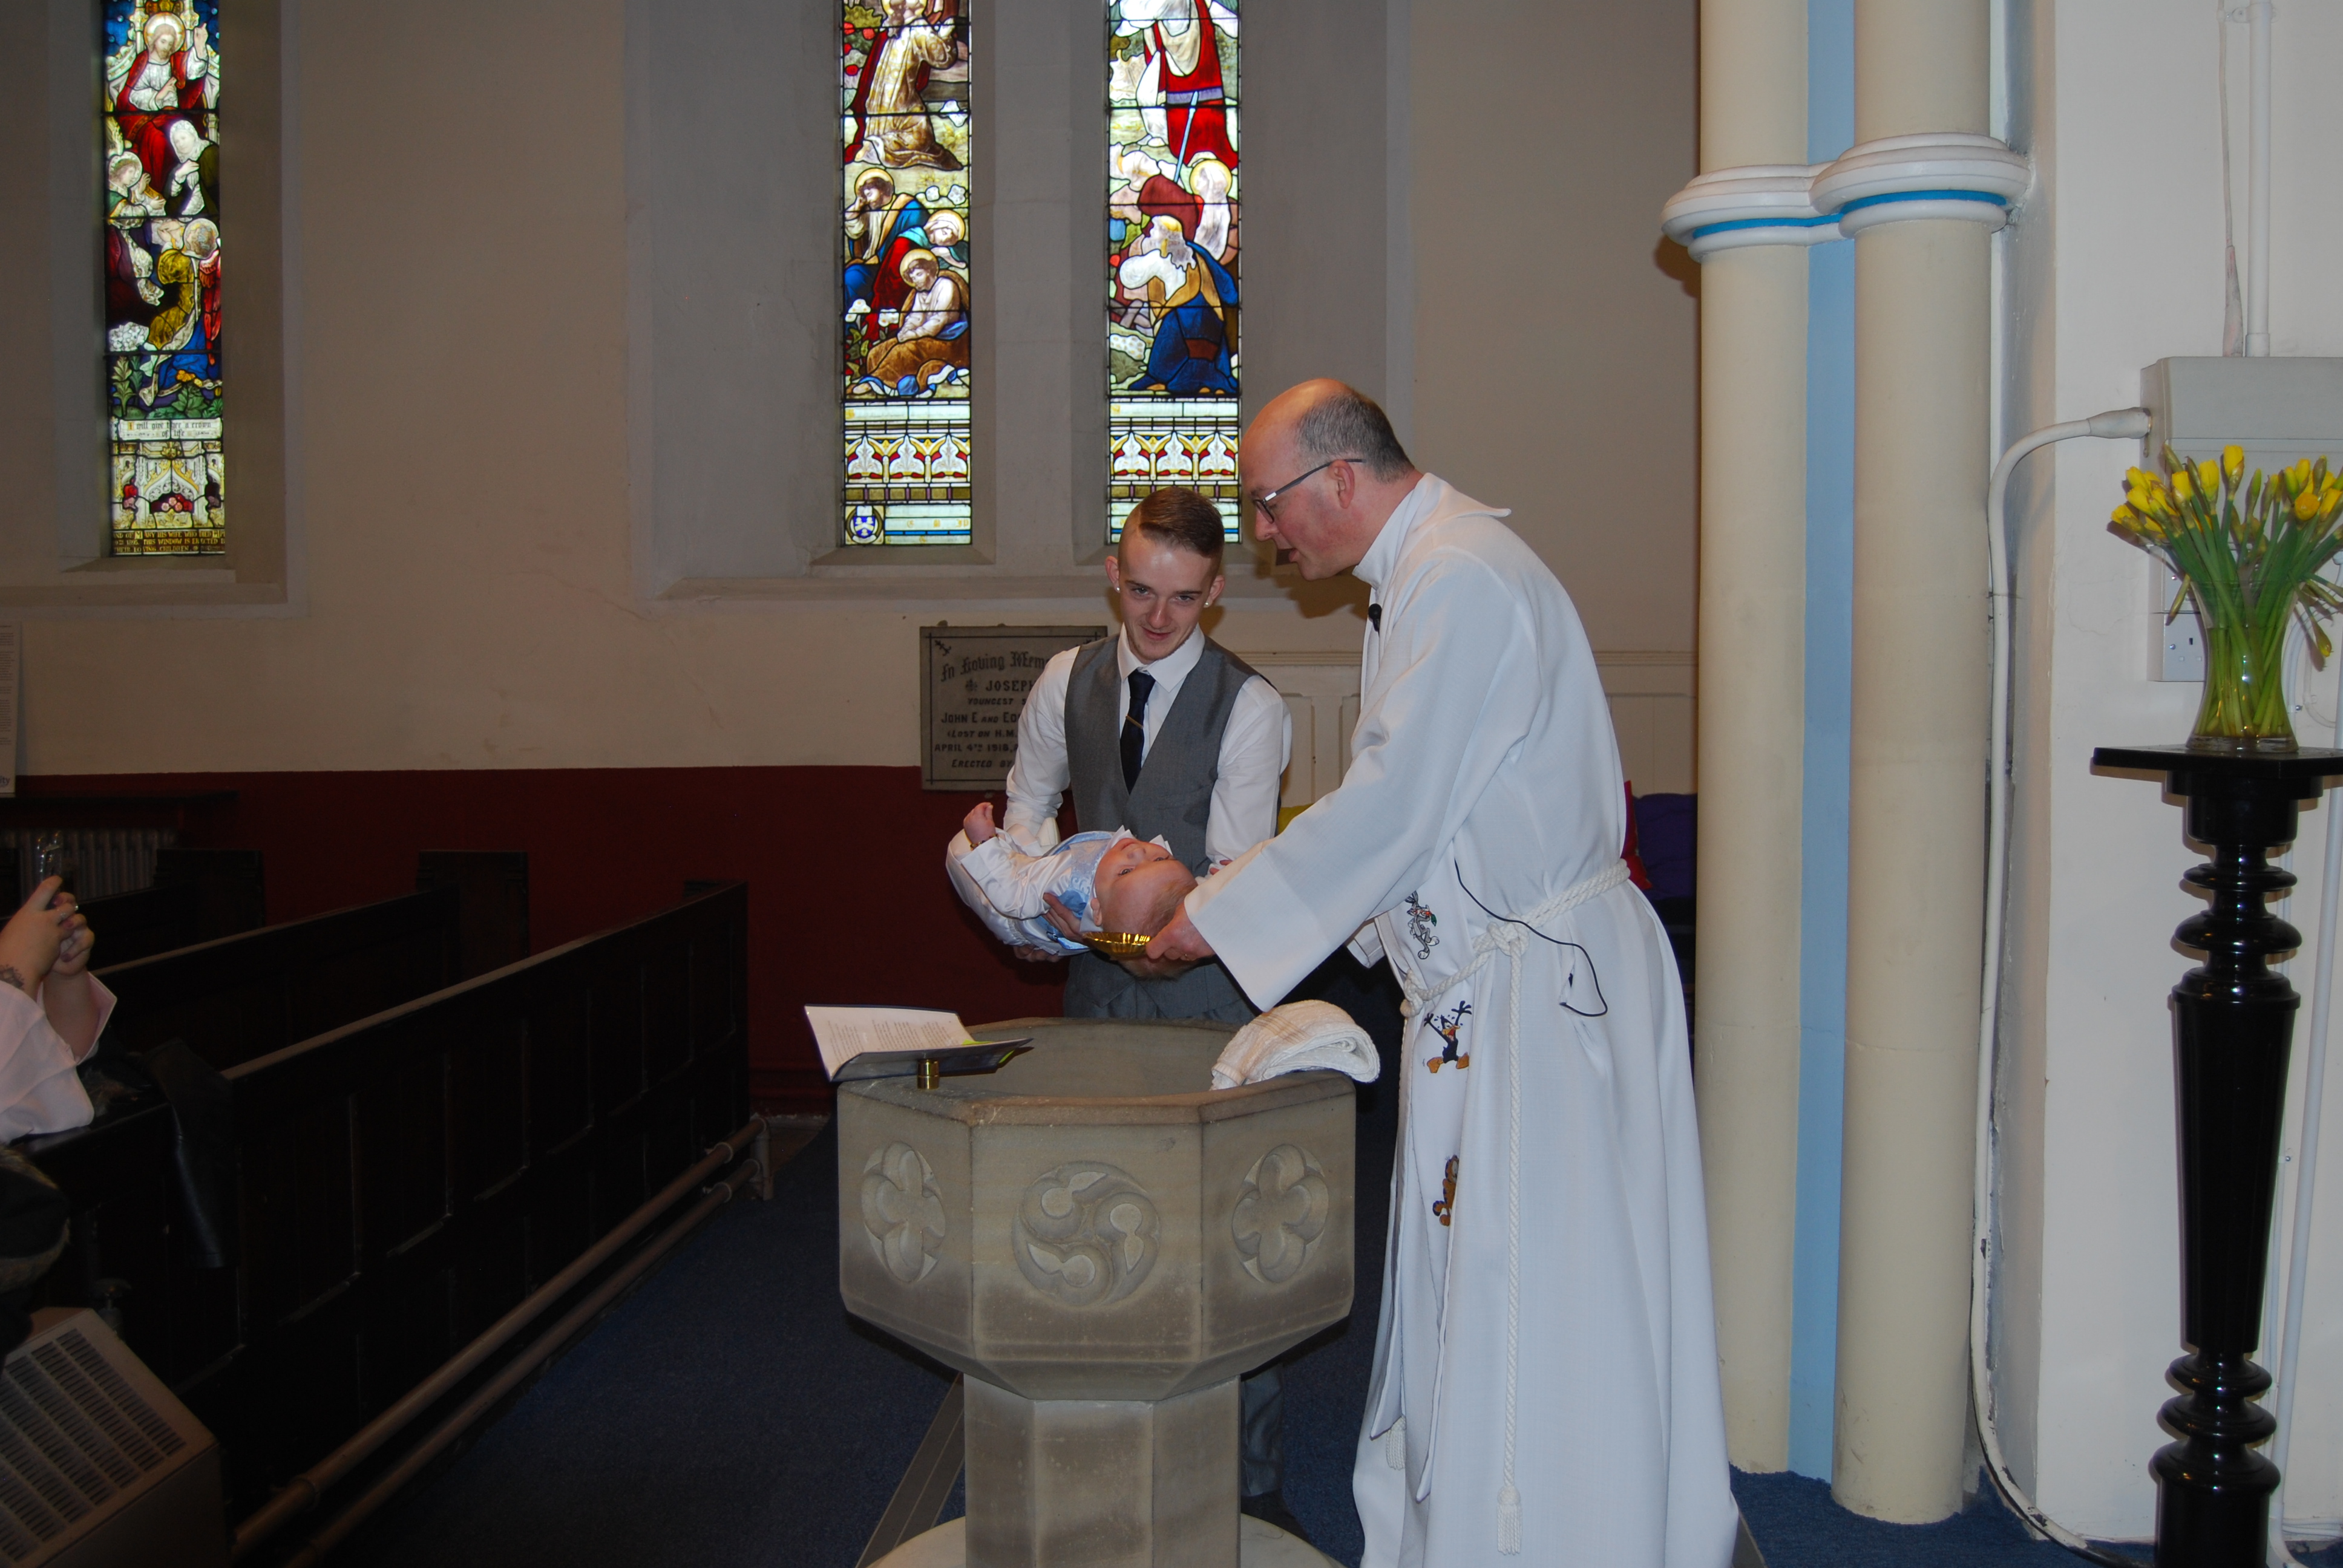 2018-03-04 — The baptism of Leo Hodges - Holy Trinity Church, Waterhead, Oldham3872 x 2592